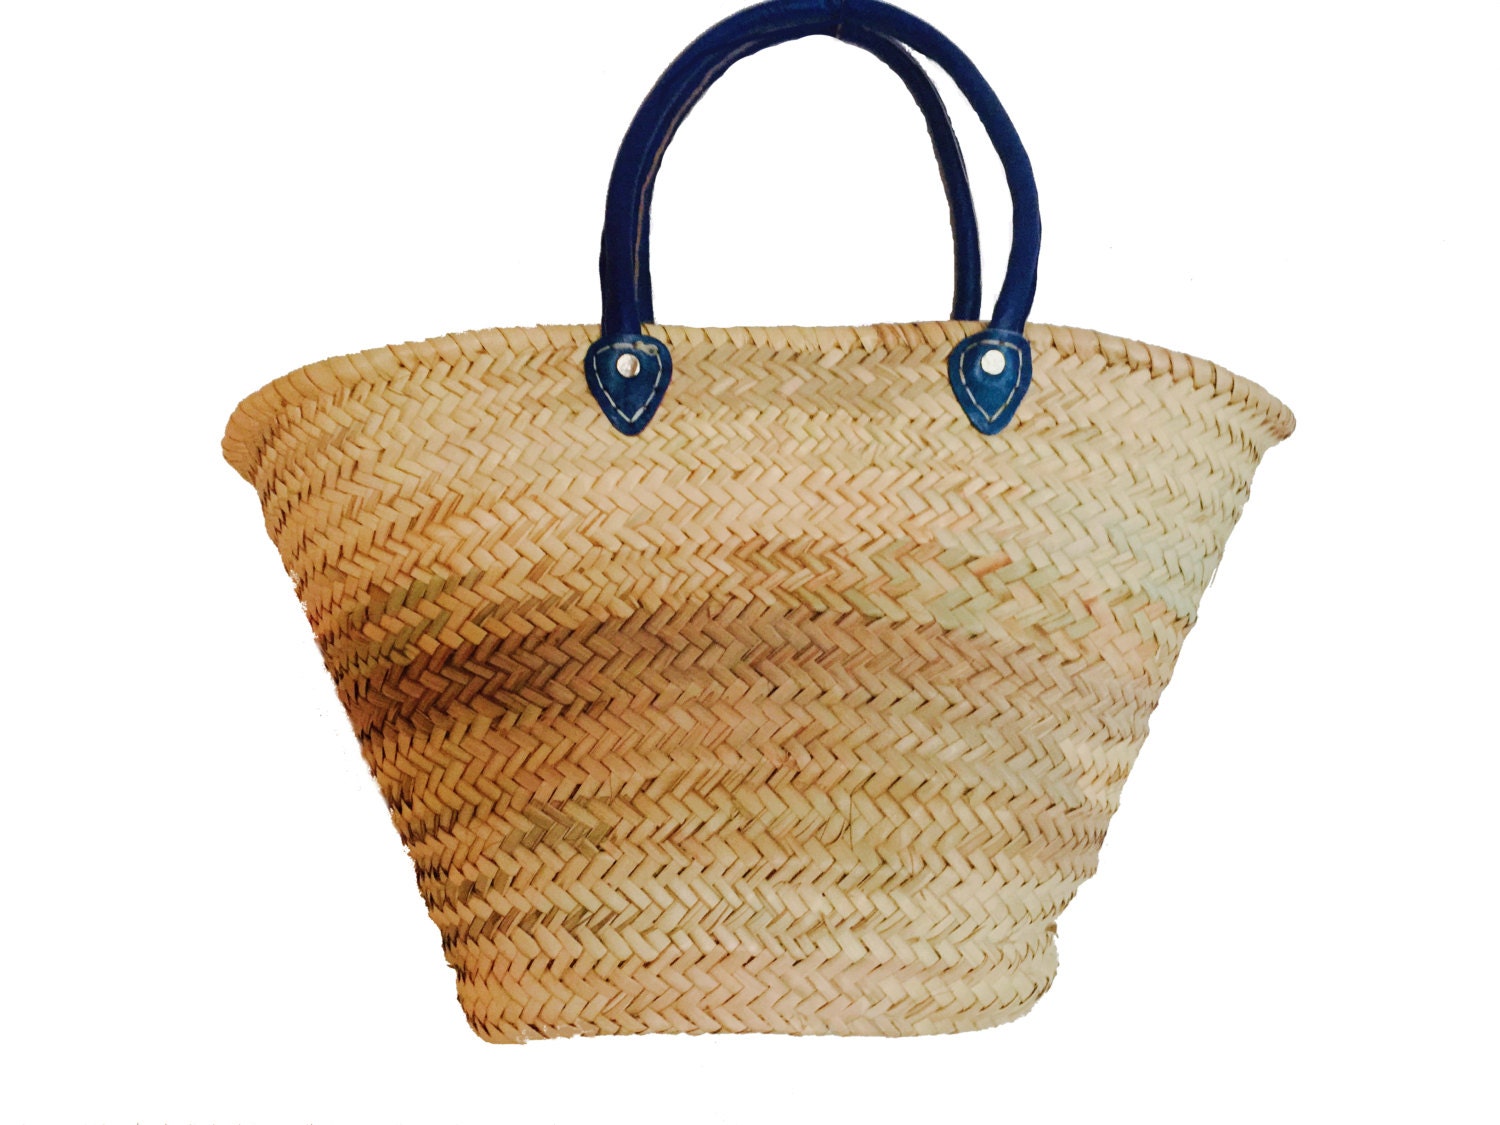 Straw bag French market bag woven straw bag by Spiralspiral